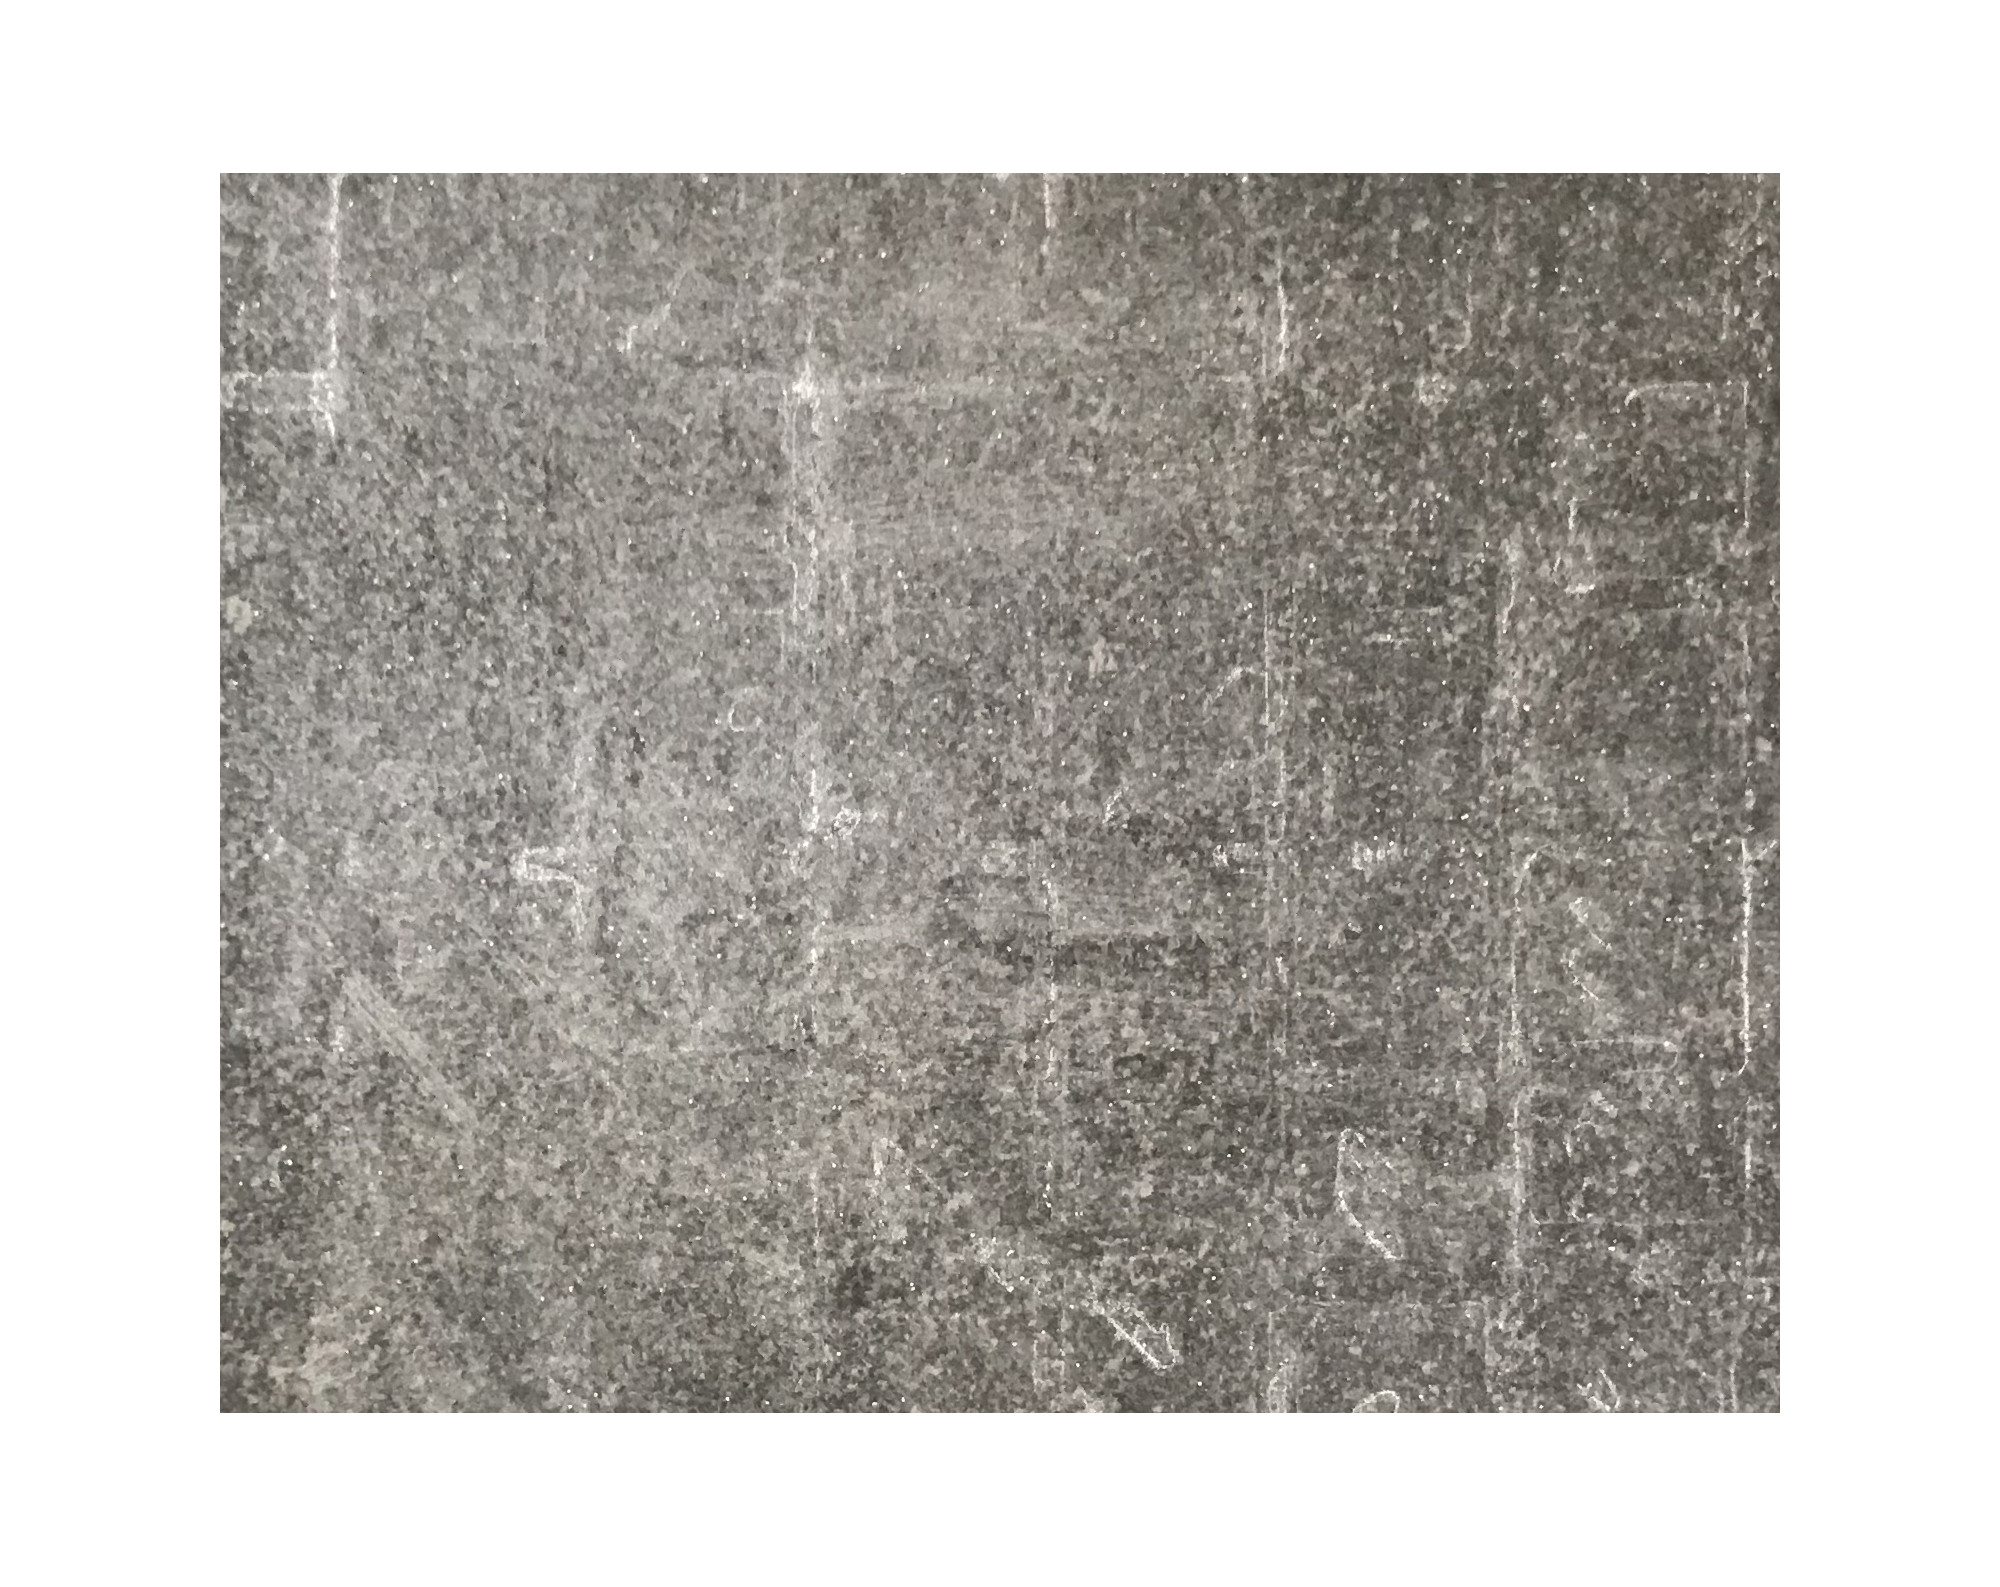 Harmo roc maranelloset, keramiek-serie, 8-vormig d:5,50mx8,55m, zand zwart, keramisch porselein